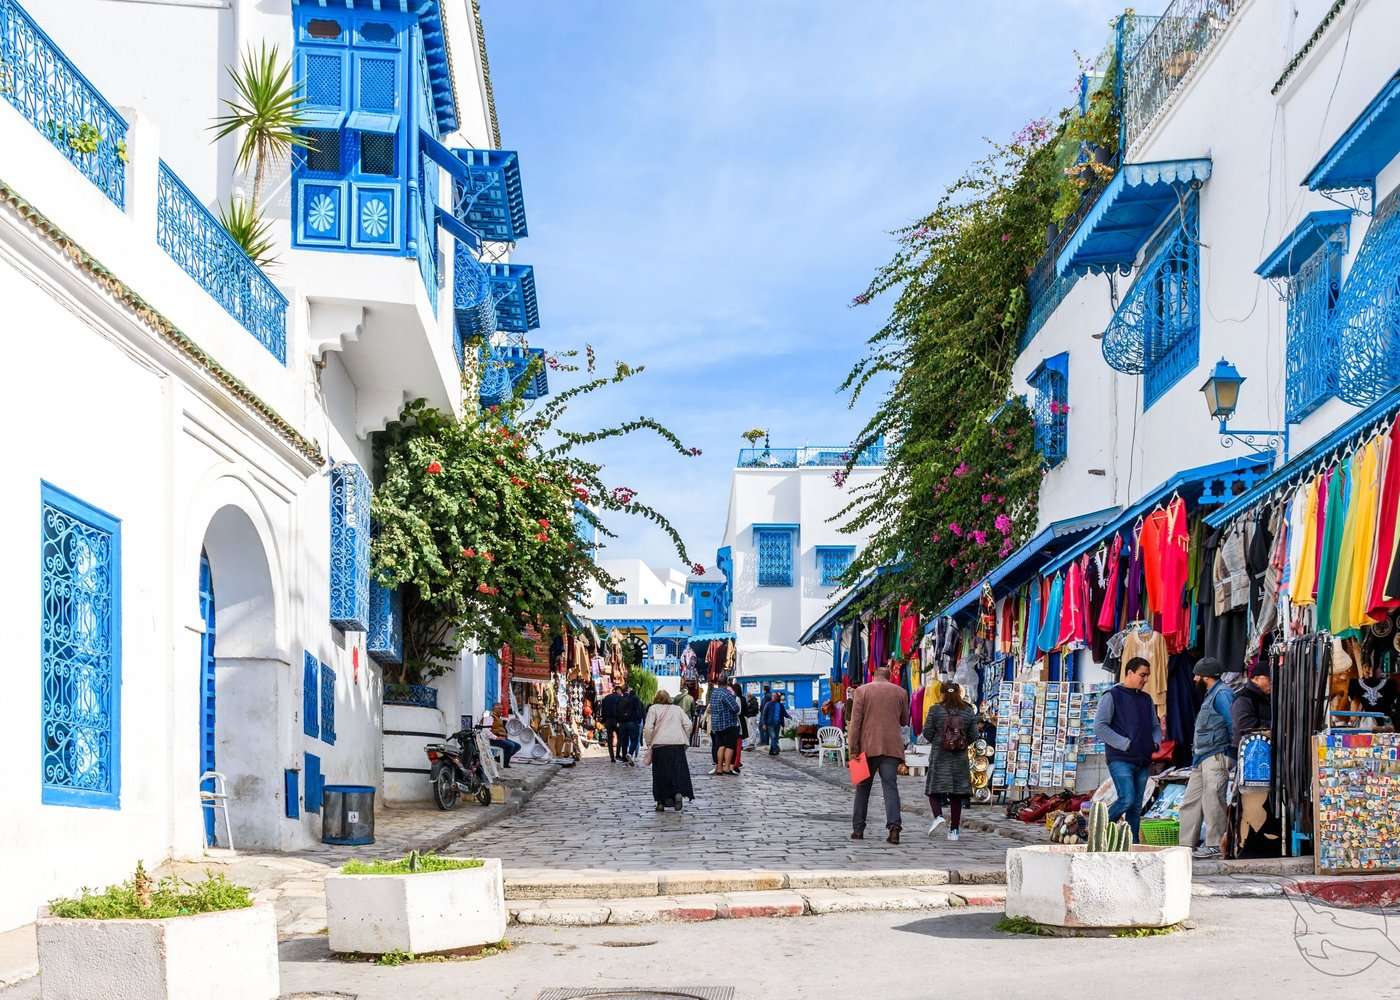 Oraș din Tunisia din Africa jigsaw puzzle online